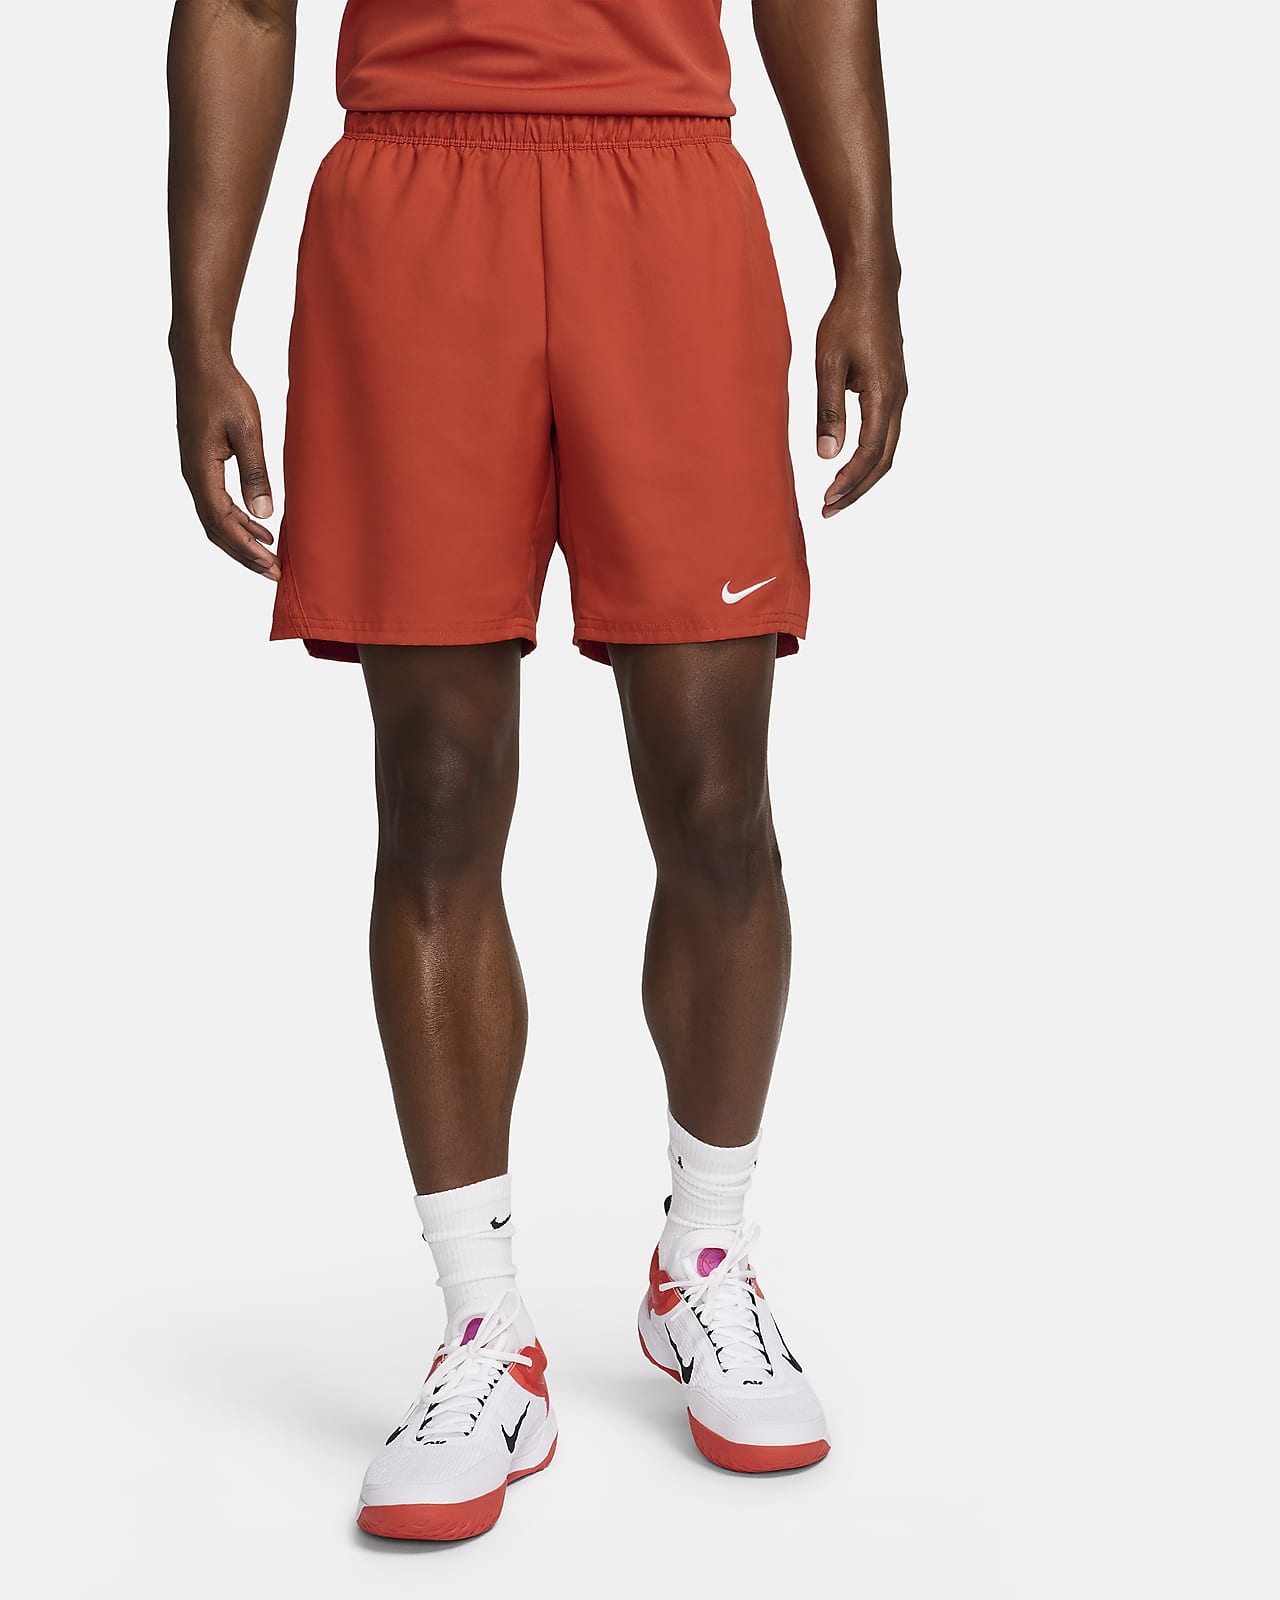 Nike Air NWT Challenge Court Sweatpants Pants Size XL Tennis Trunk 